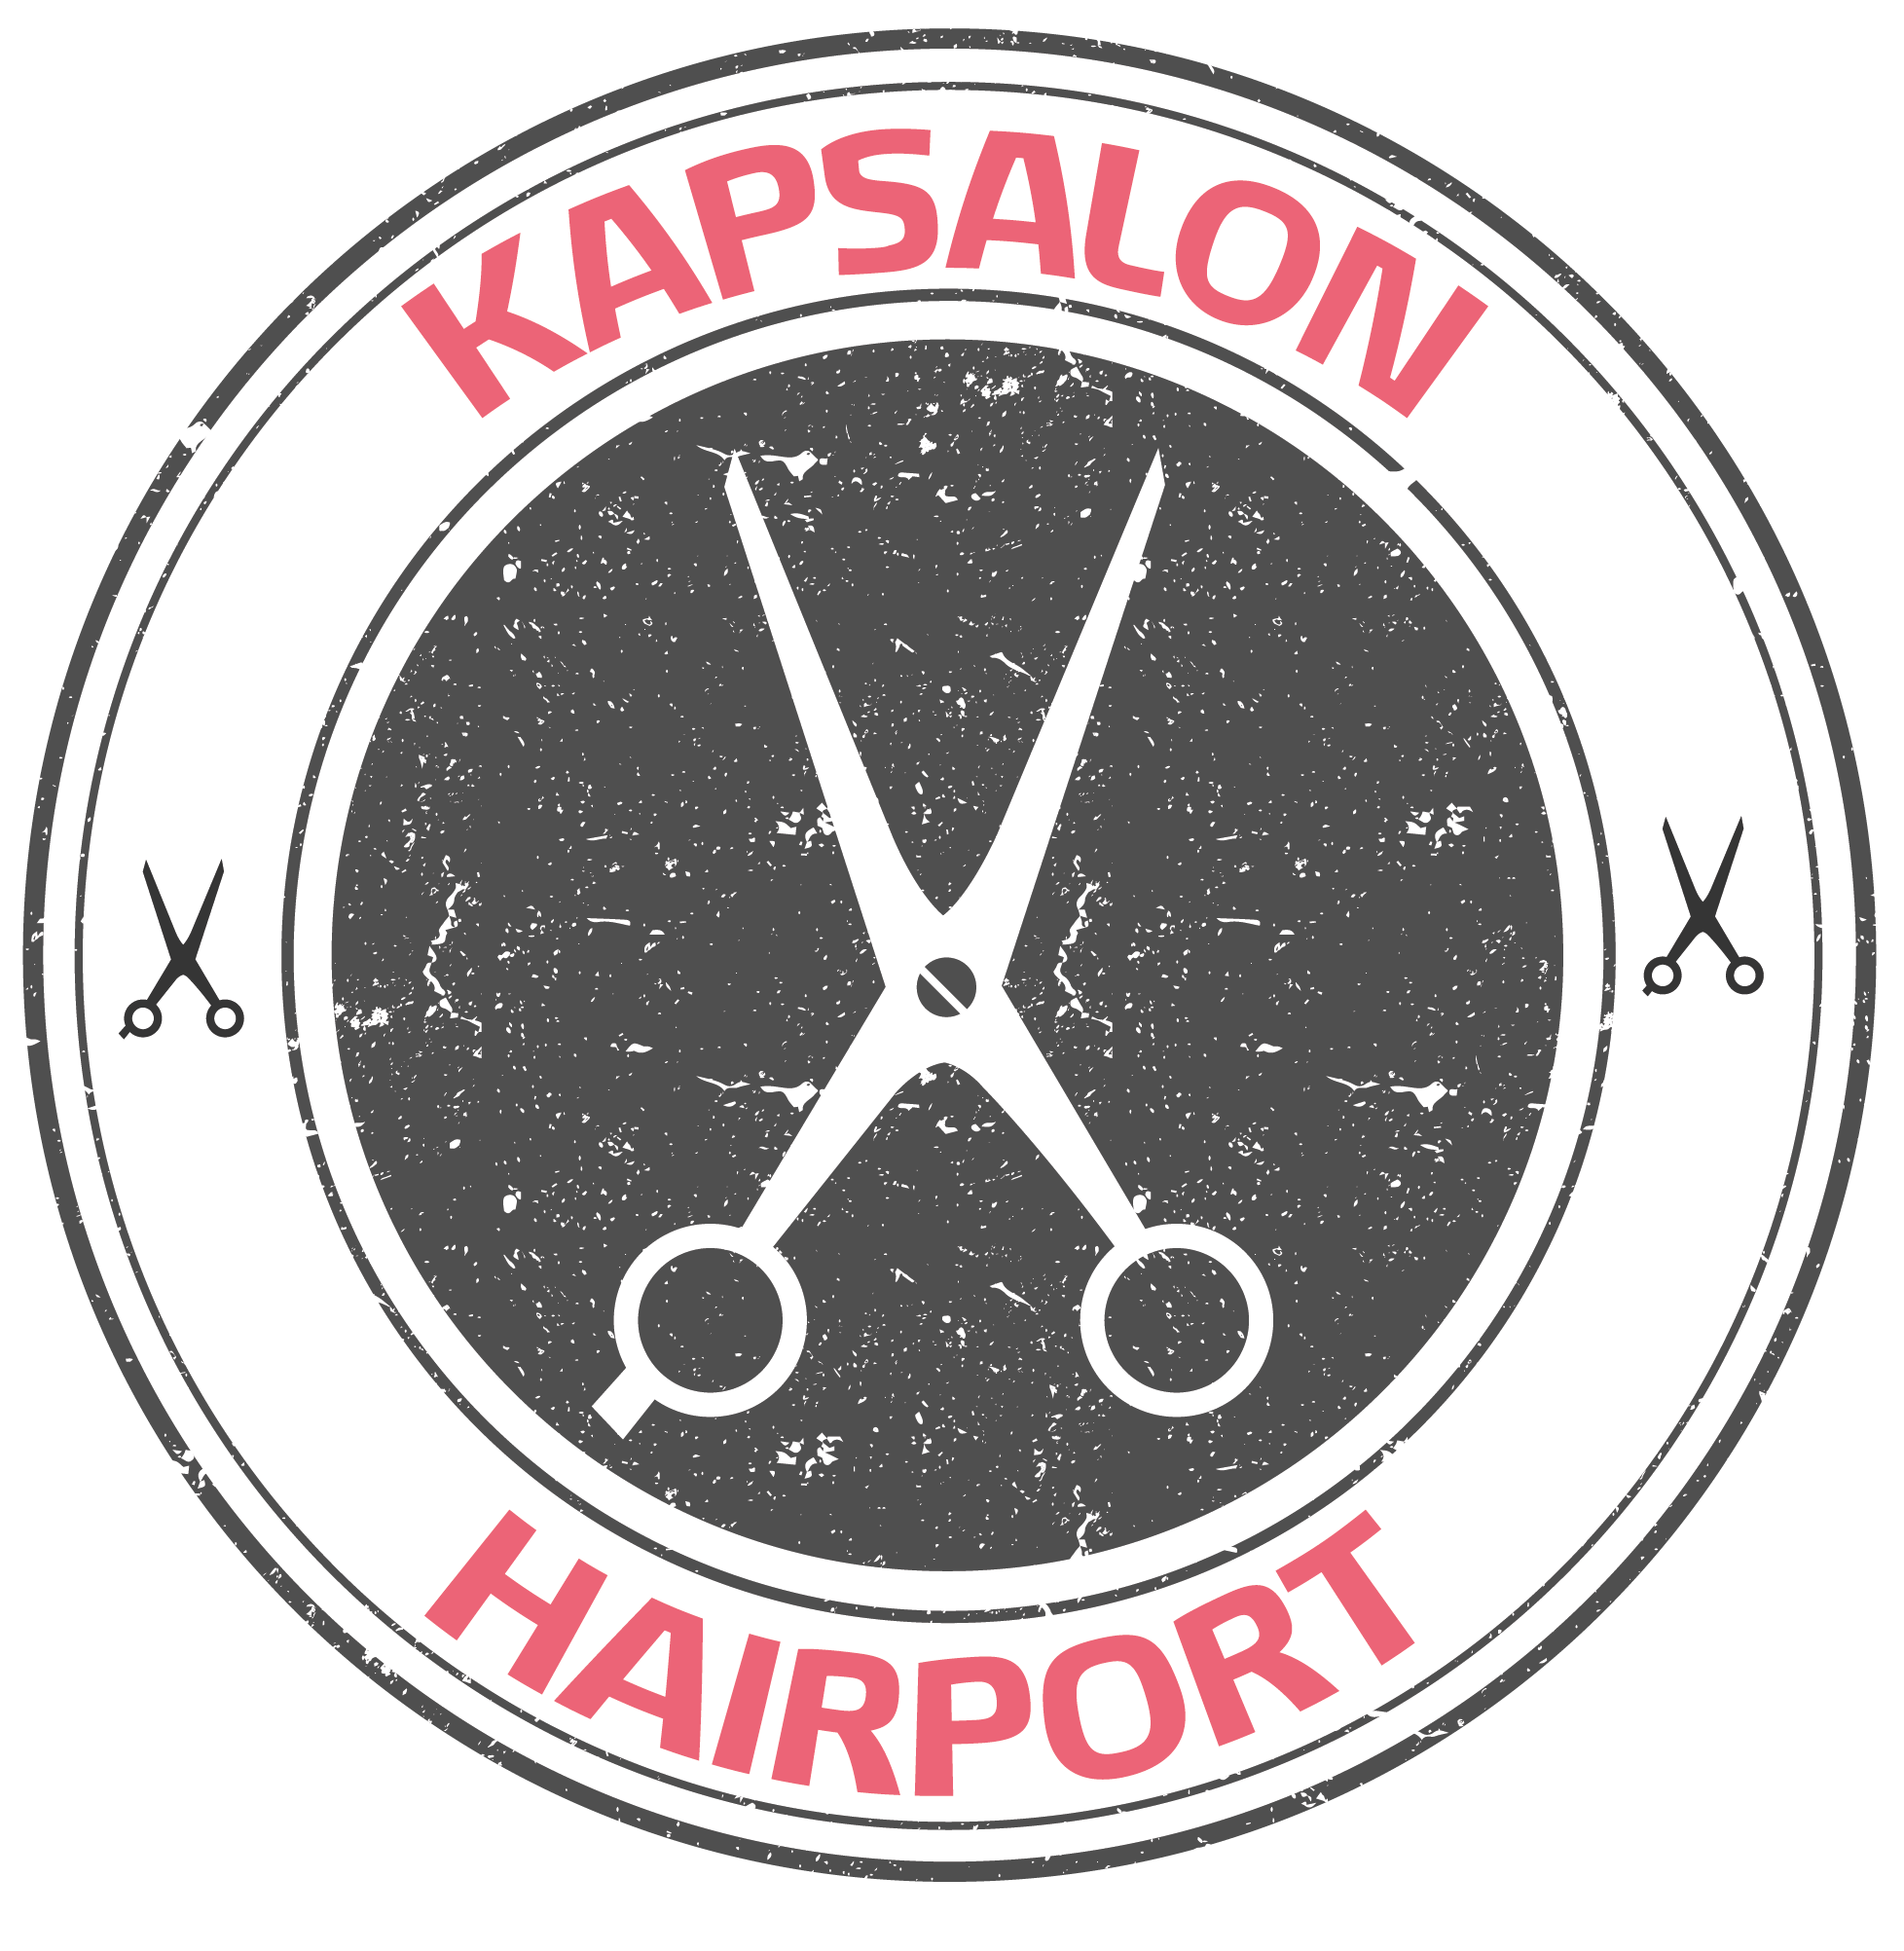 Kapper Goes - Kapsalon Kapsalon Hairport